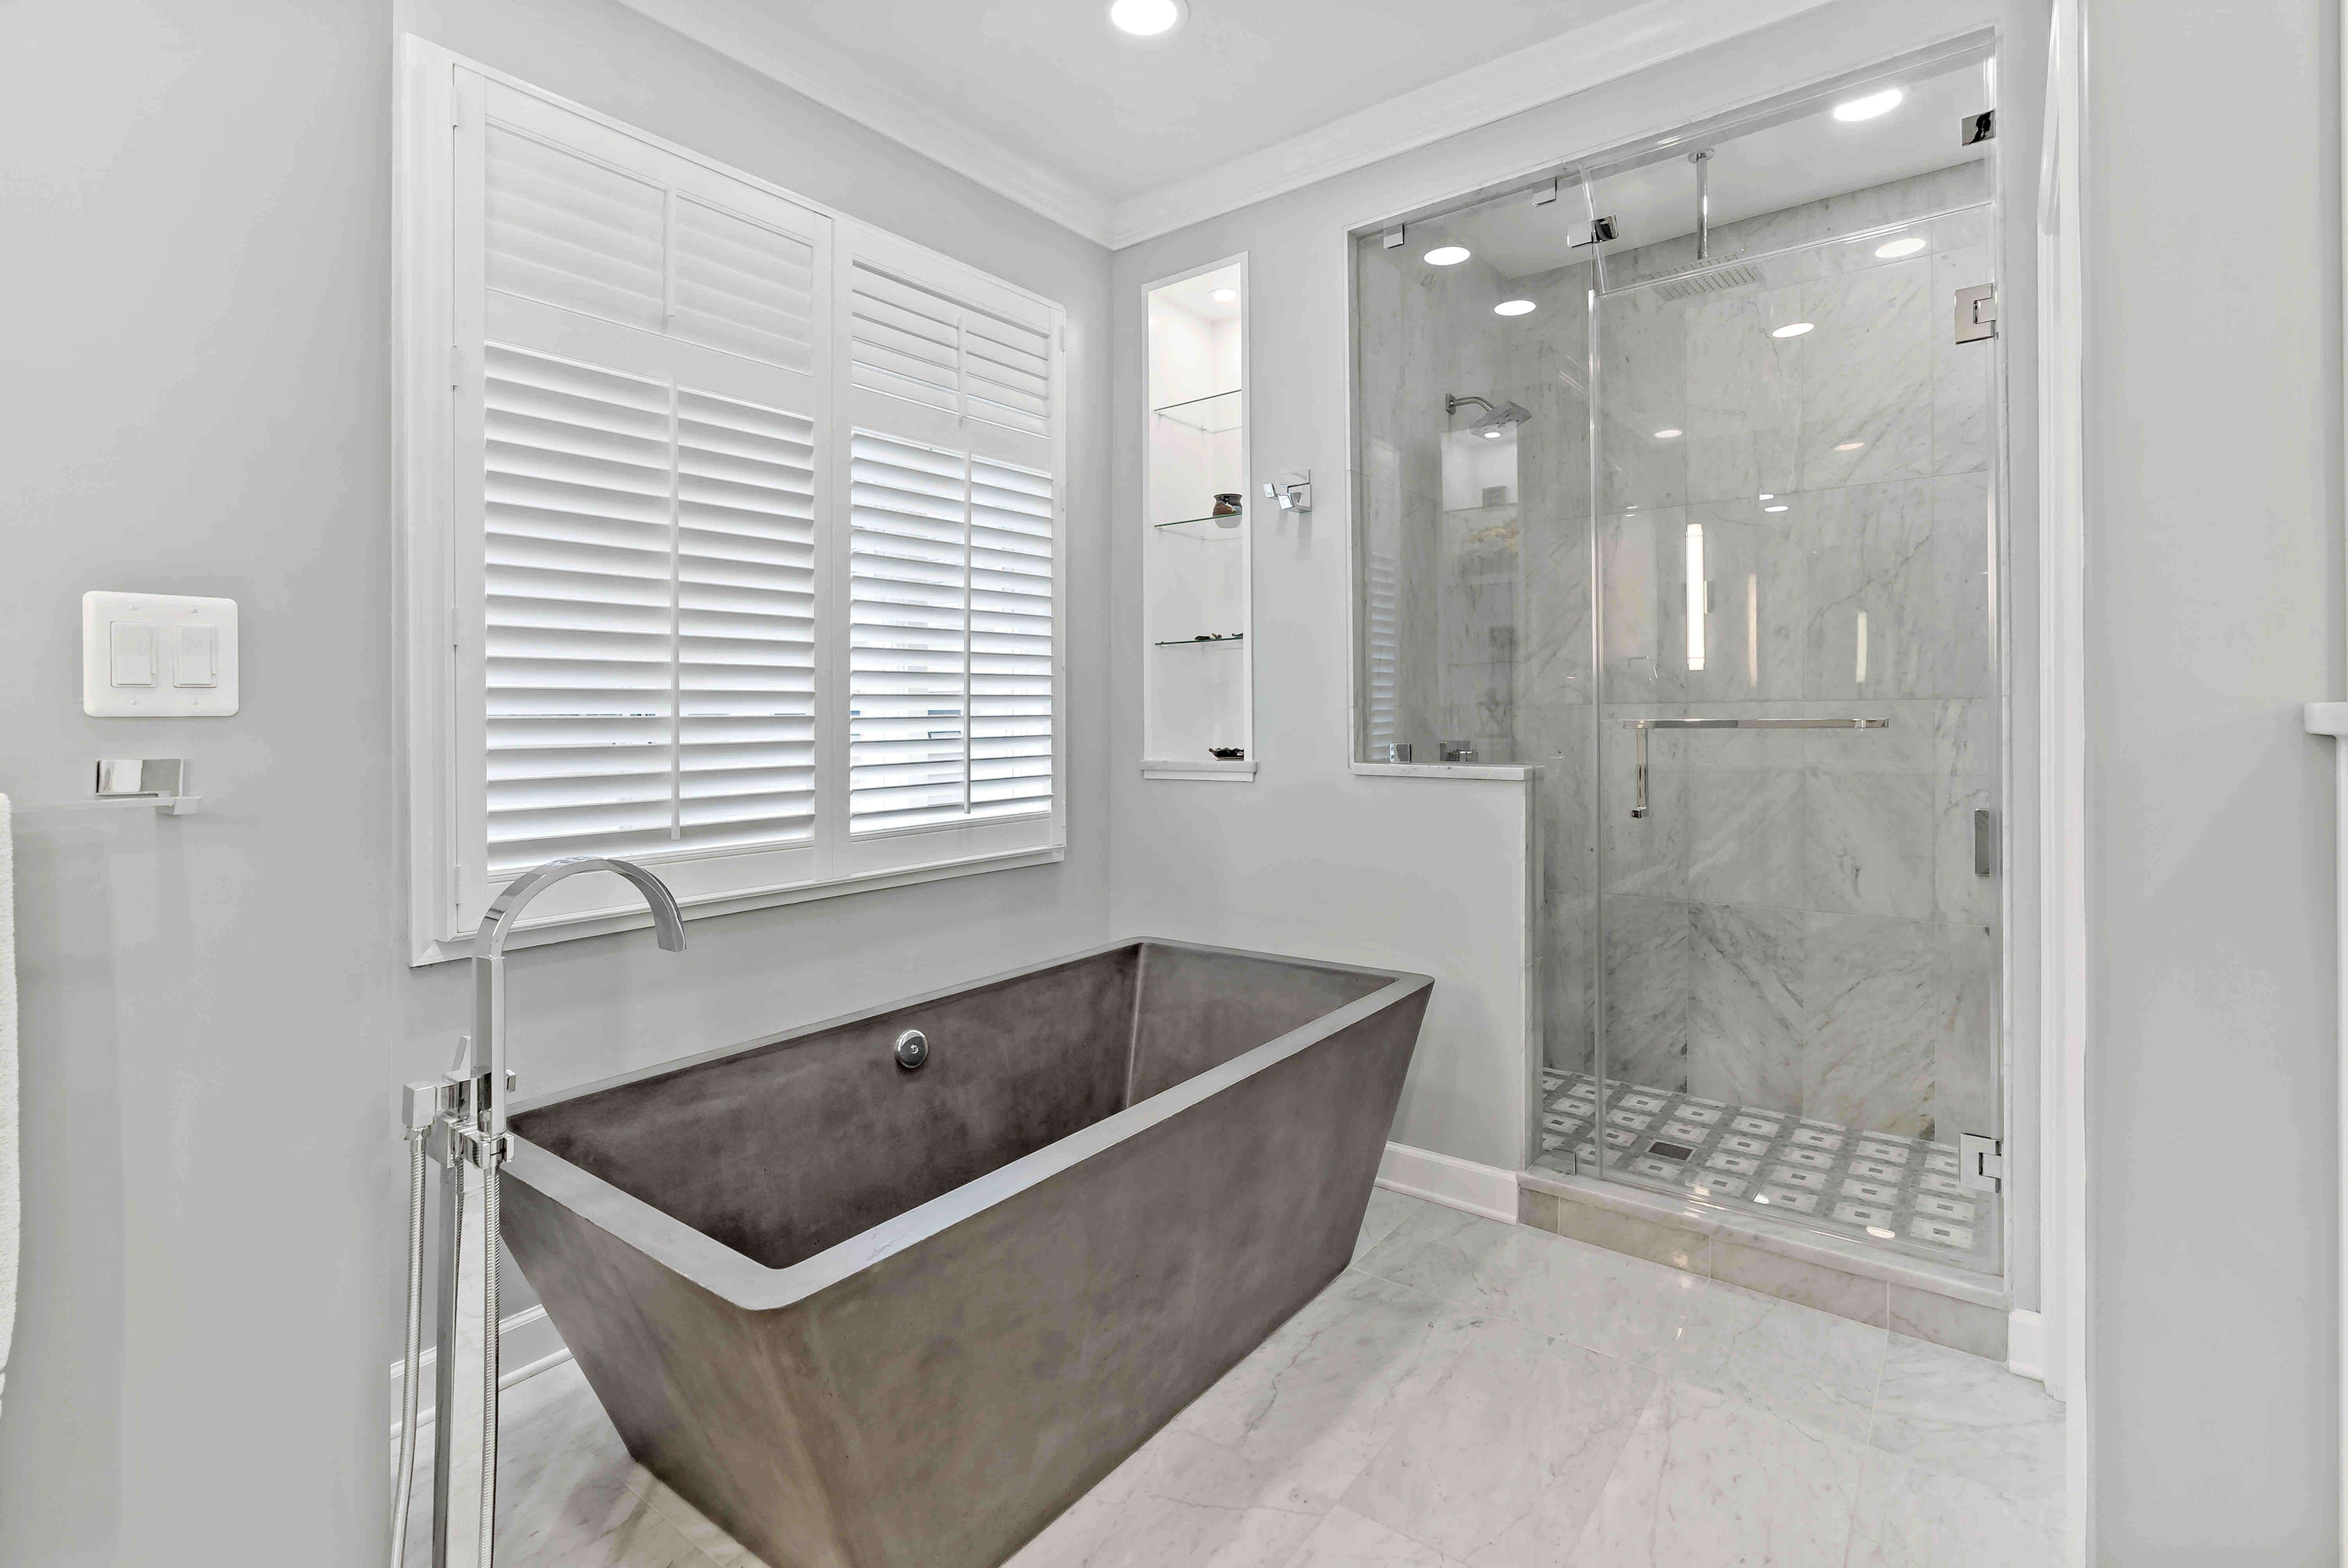 Rectangular stand-alone bathtub and glass shower door